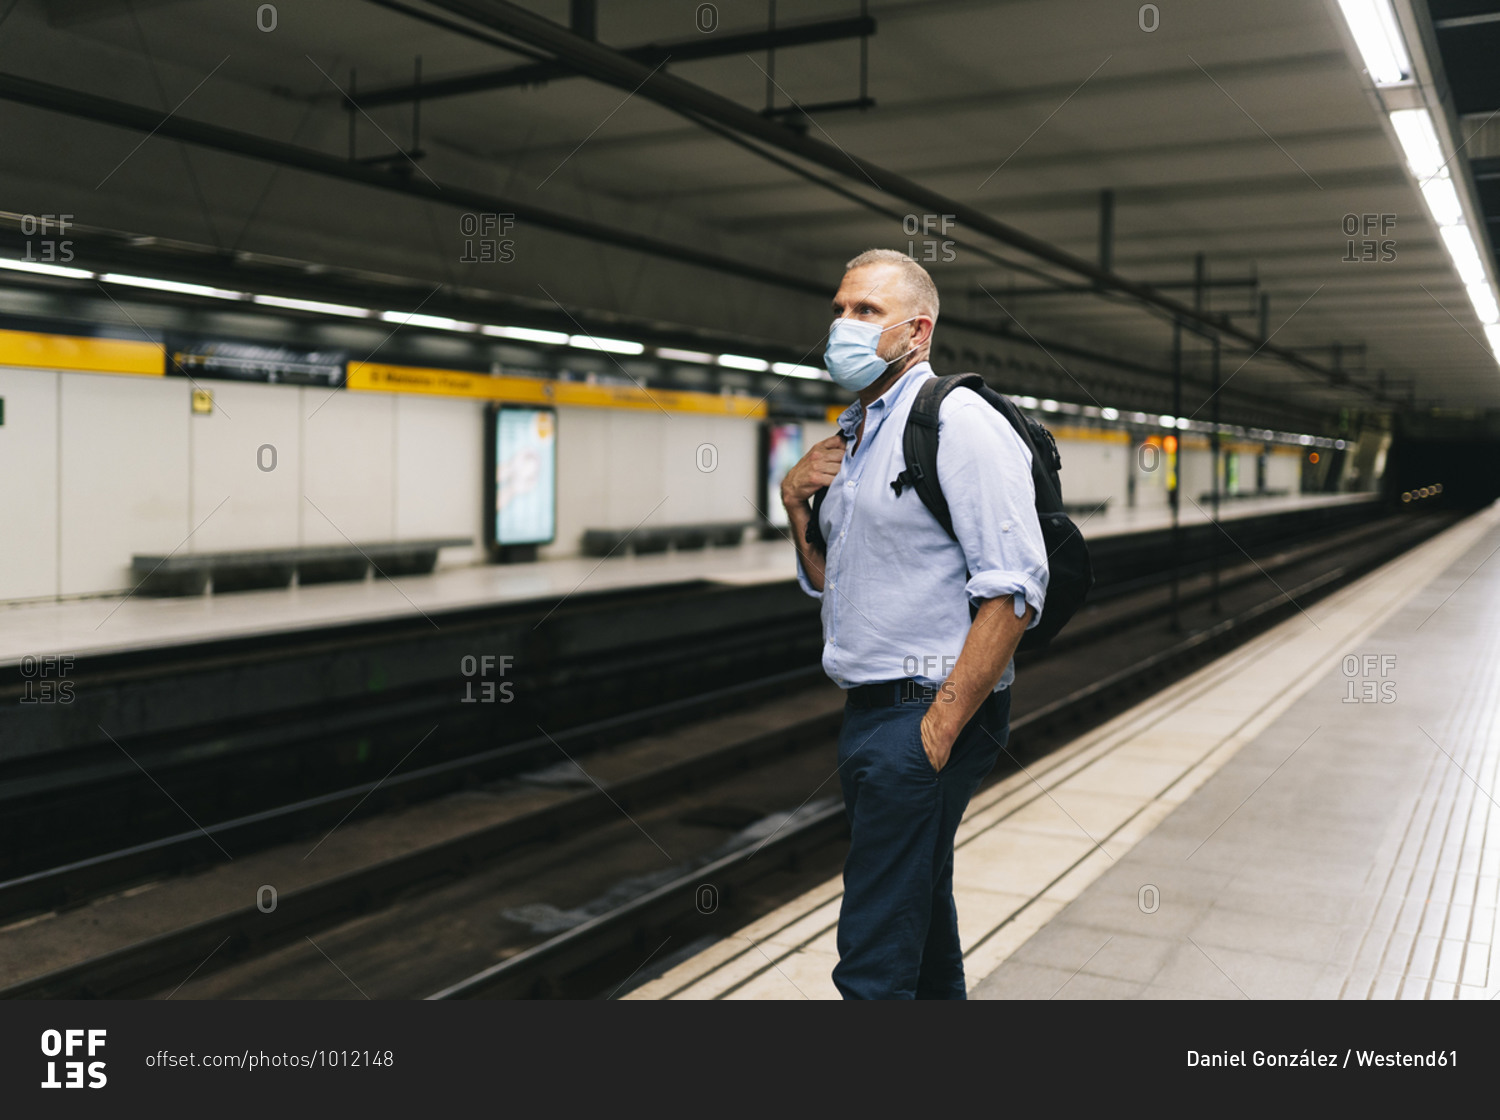 Businessman wearing face mask while standing at subway platform